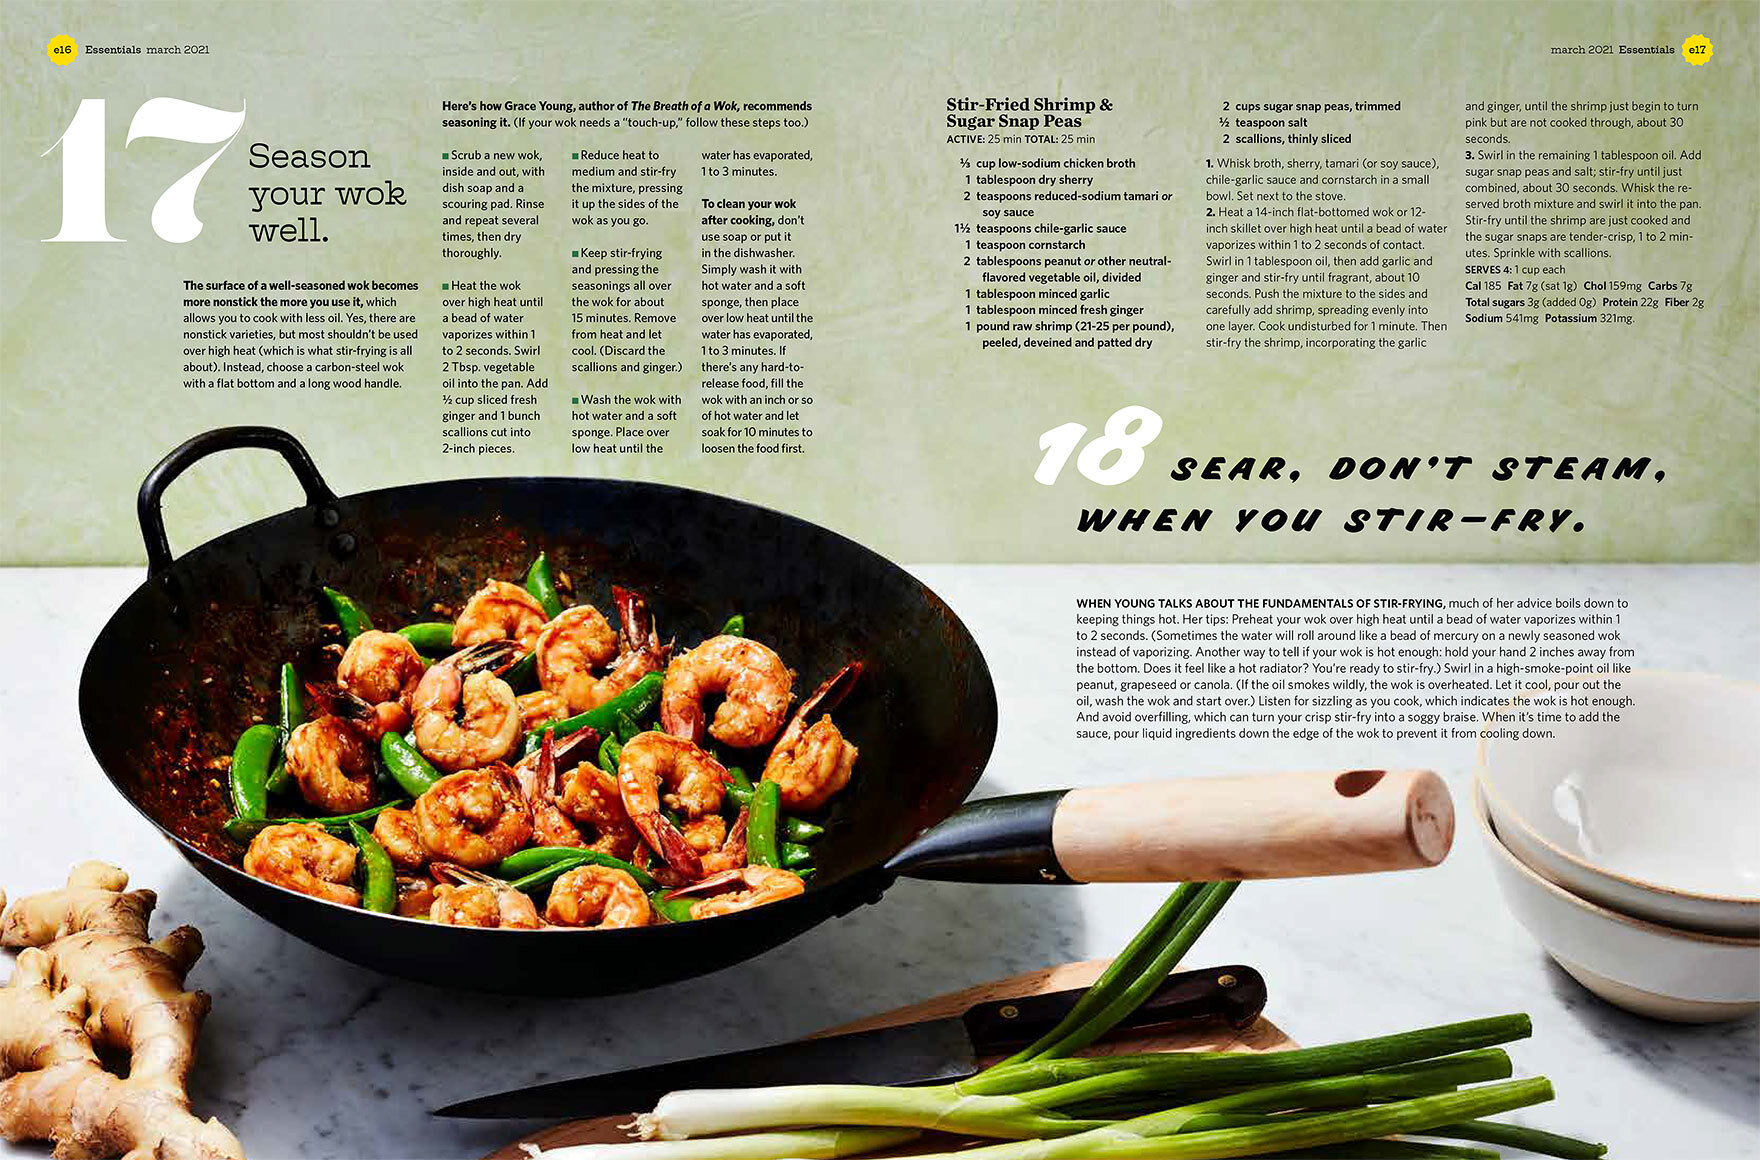 Eva-kolenko-best-top-food-photographer-produce-veggies-eating-well-recipes-heathy-vibrant-chicken-stir-fry-shrimp.jpg